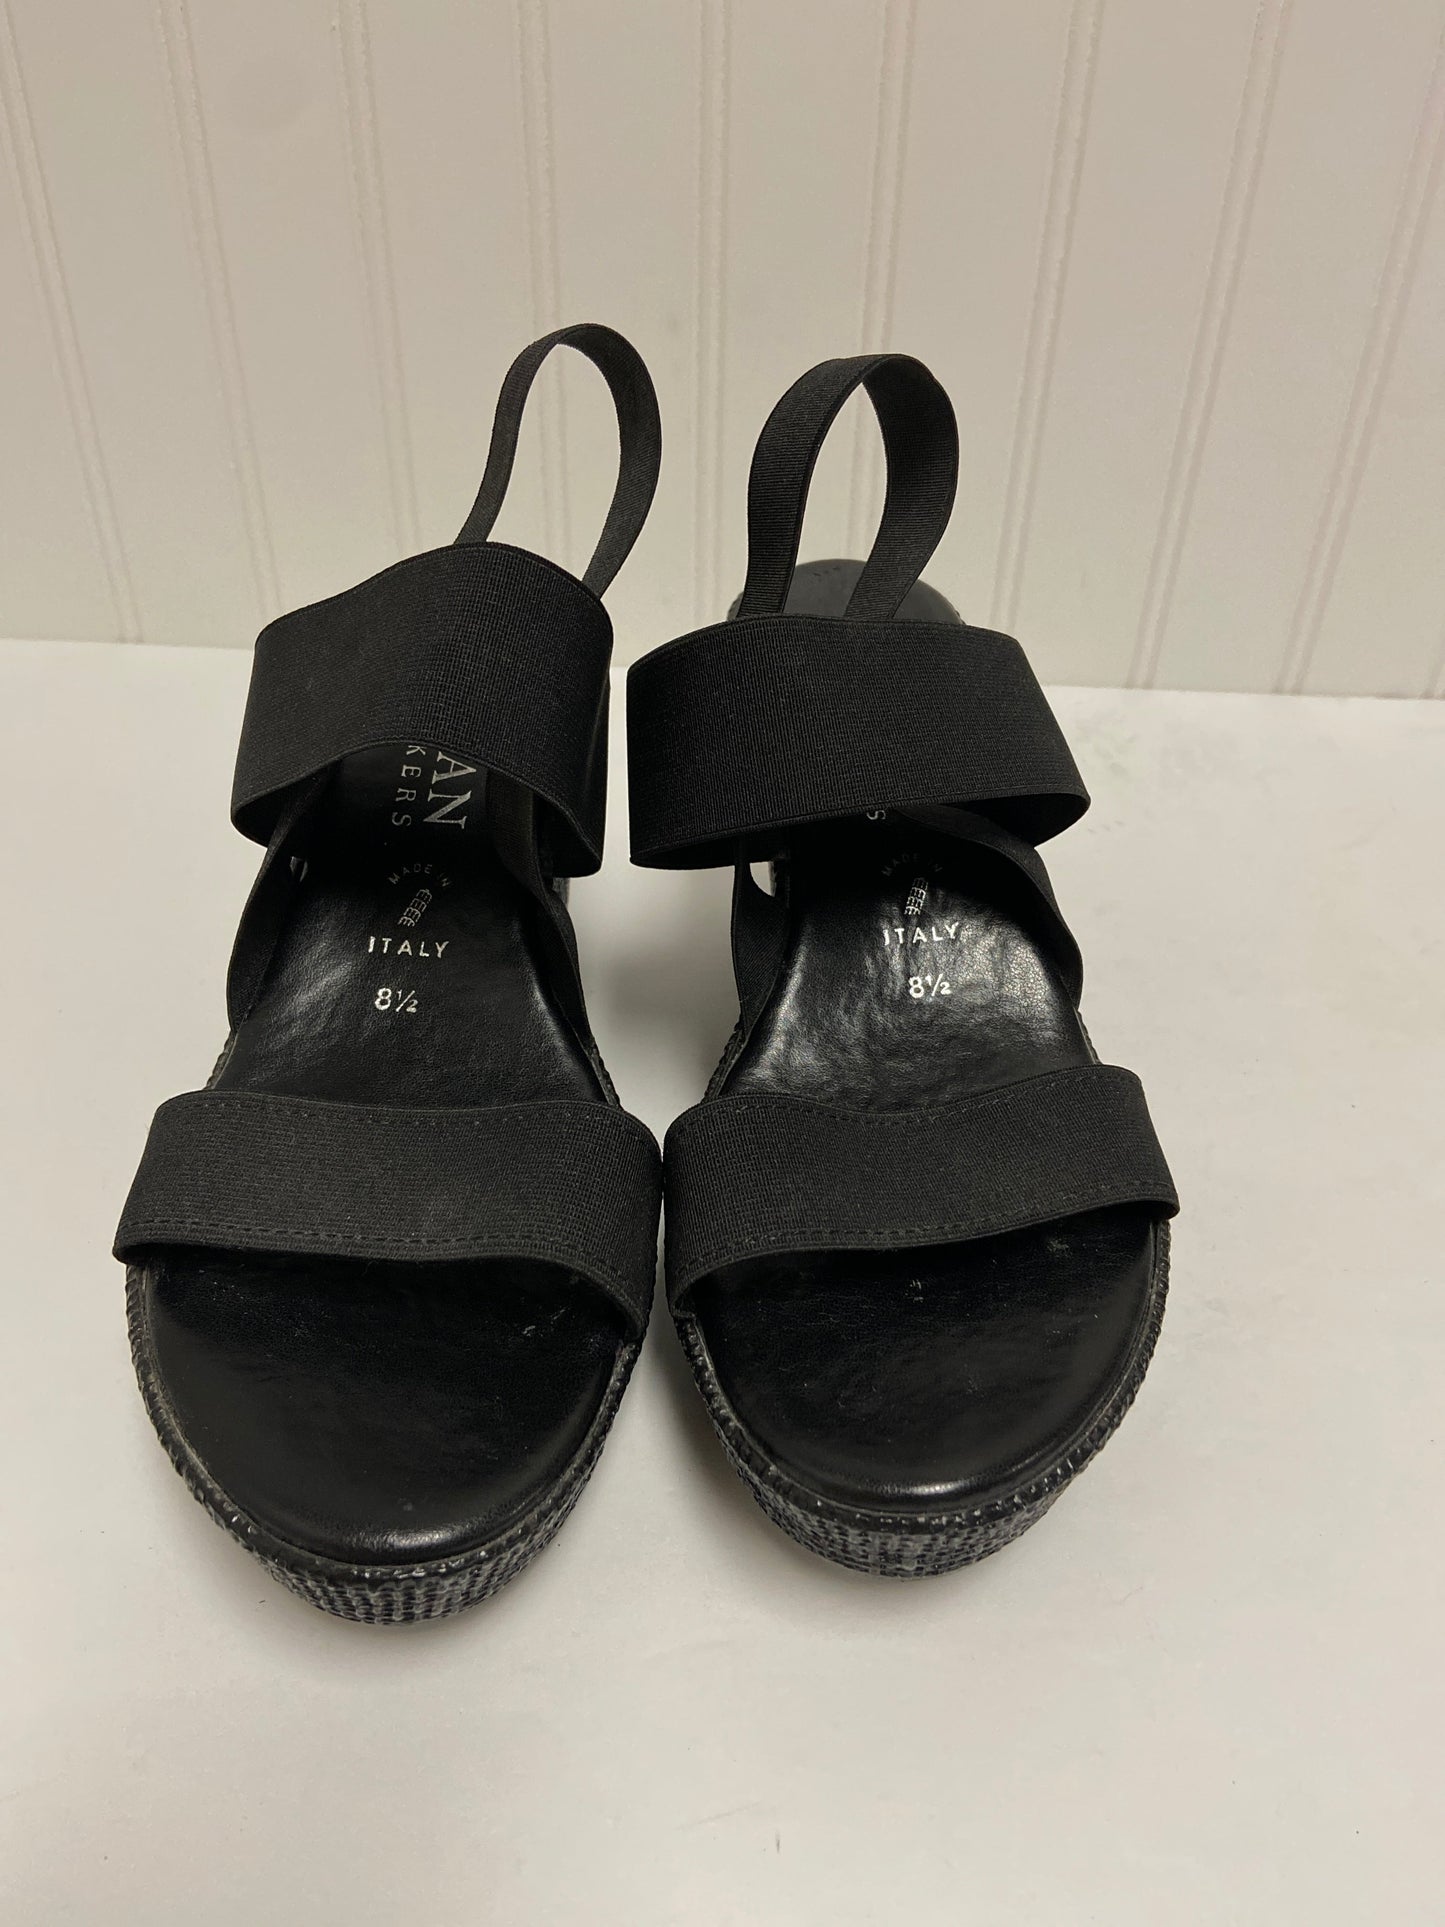 Black Sandals Heels Wedge Italian Shoemakers, Size 8.5